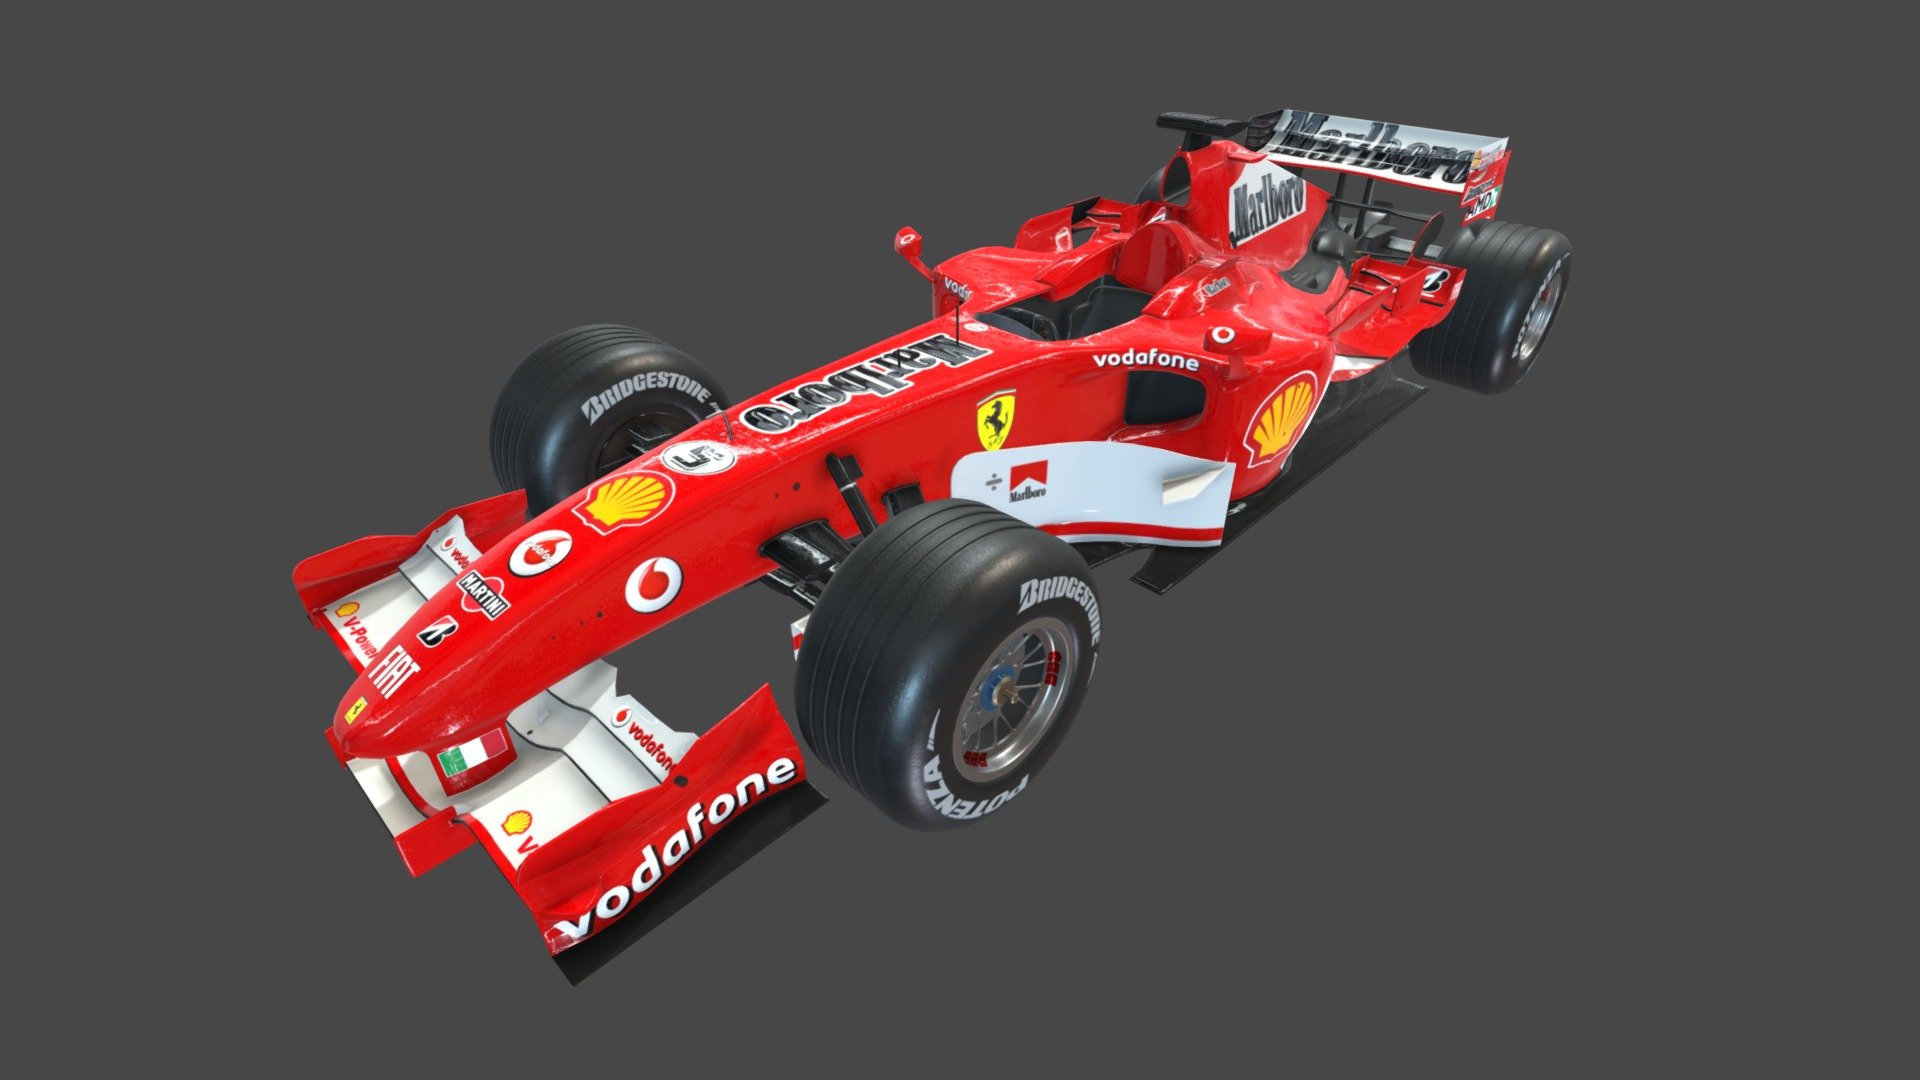 Michael Schumacher's Ferrari. 2006 version.

Modelled in Blender and texturized in Substance Painter 3d model